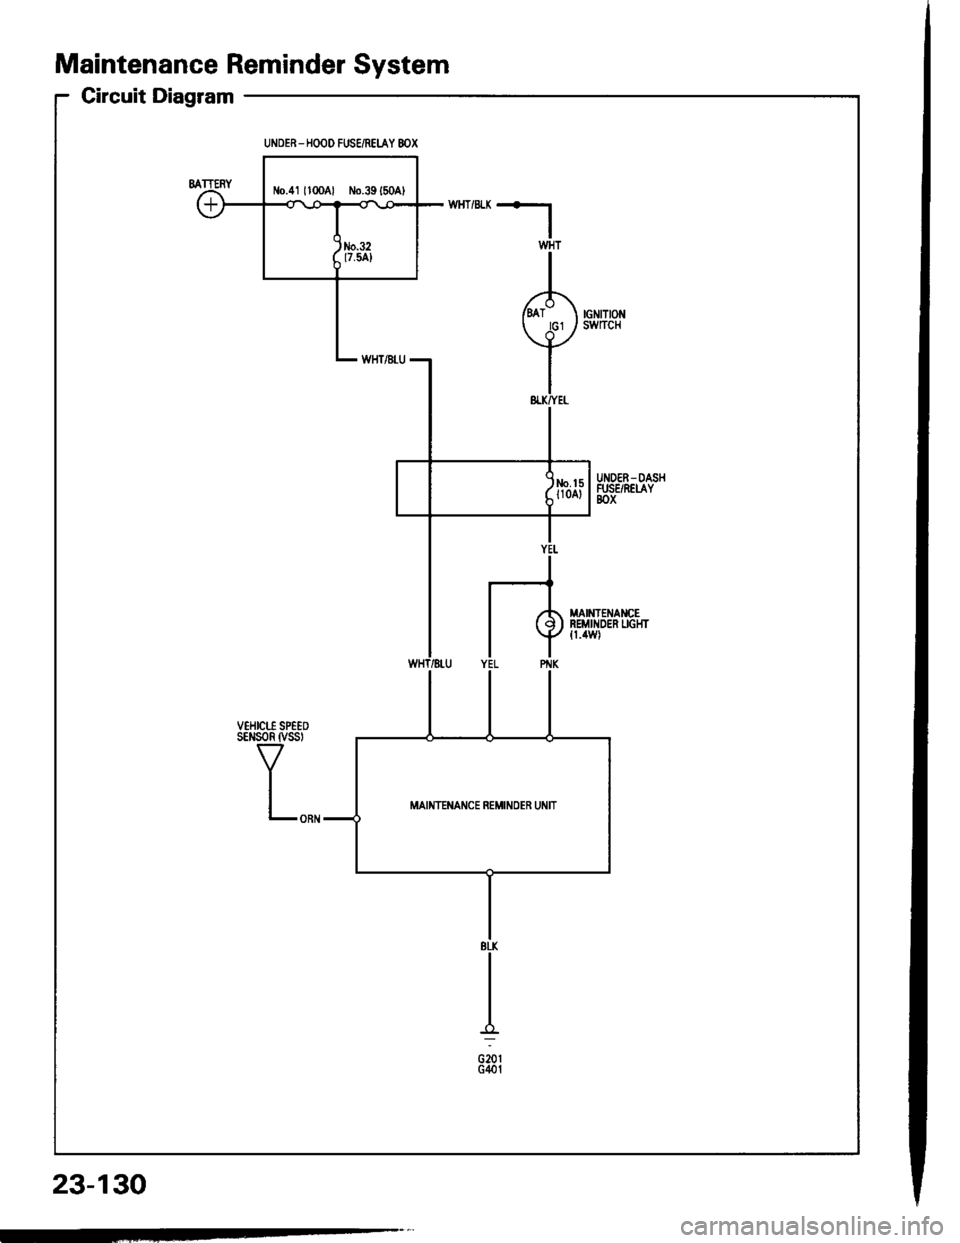 HONDA INTEGRA 1994 4.G User Guide Maintenance Reminder System
Circuit Diagram
23-130
UNDER-HOOD FUSE/REIAY 8OX
MAINIET,IAT,ICE REMINOER UiIIT 